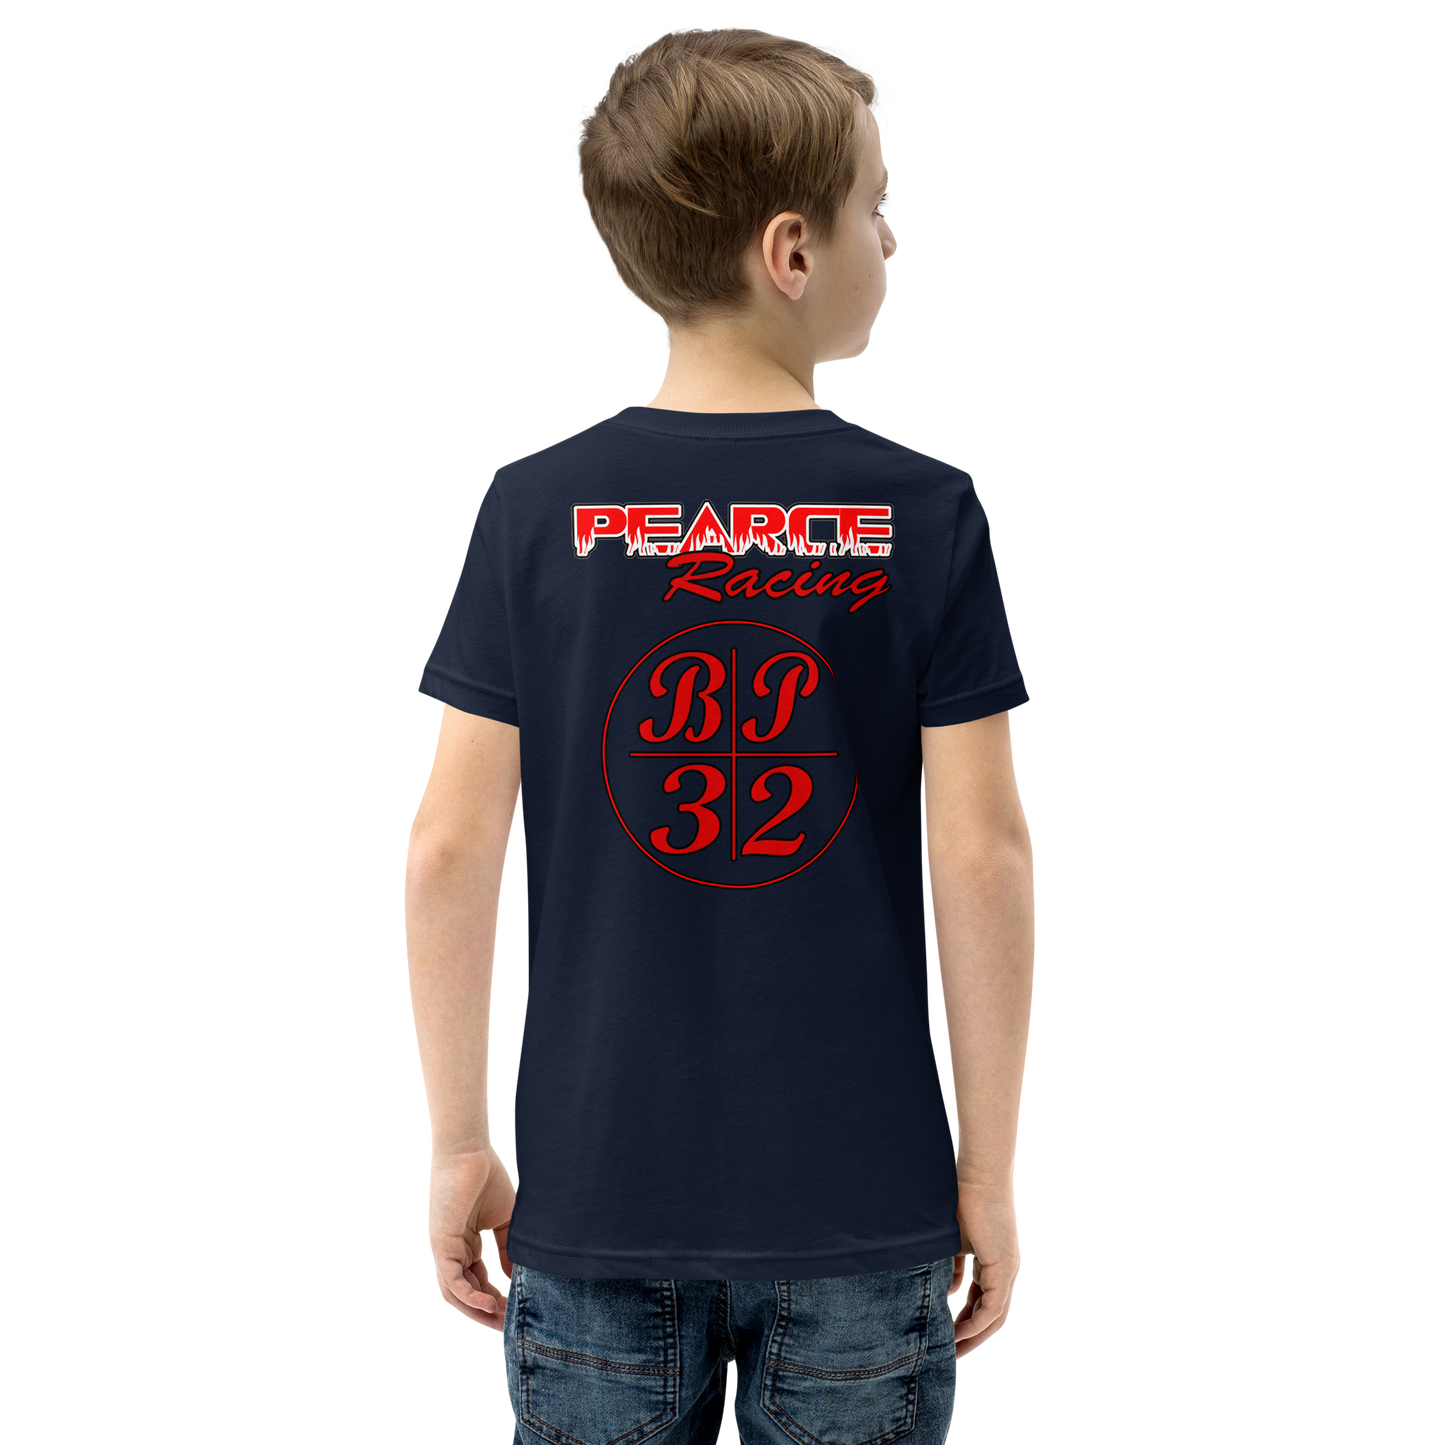 Youth OG Pearce Racing Wheelie Shirt - Youth Short Sleeve T-Shirt